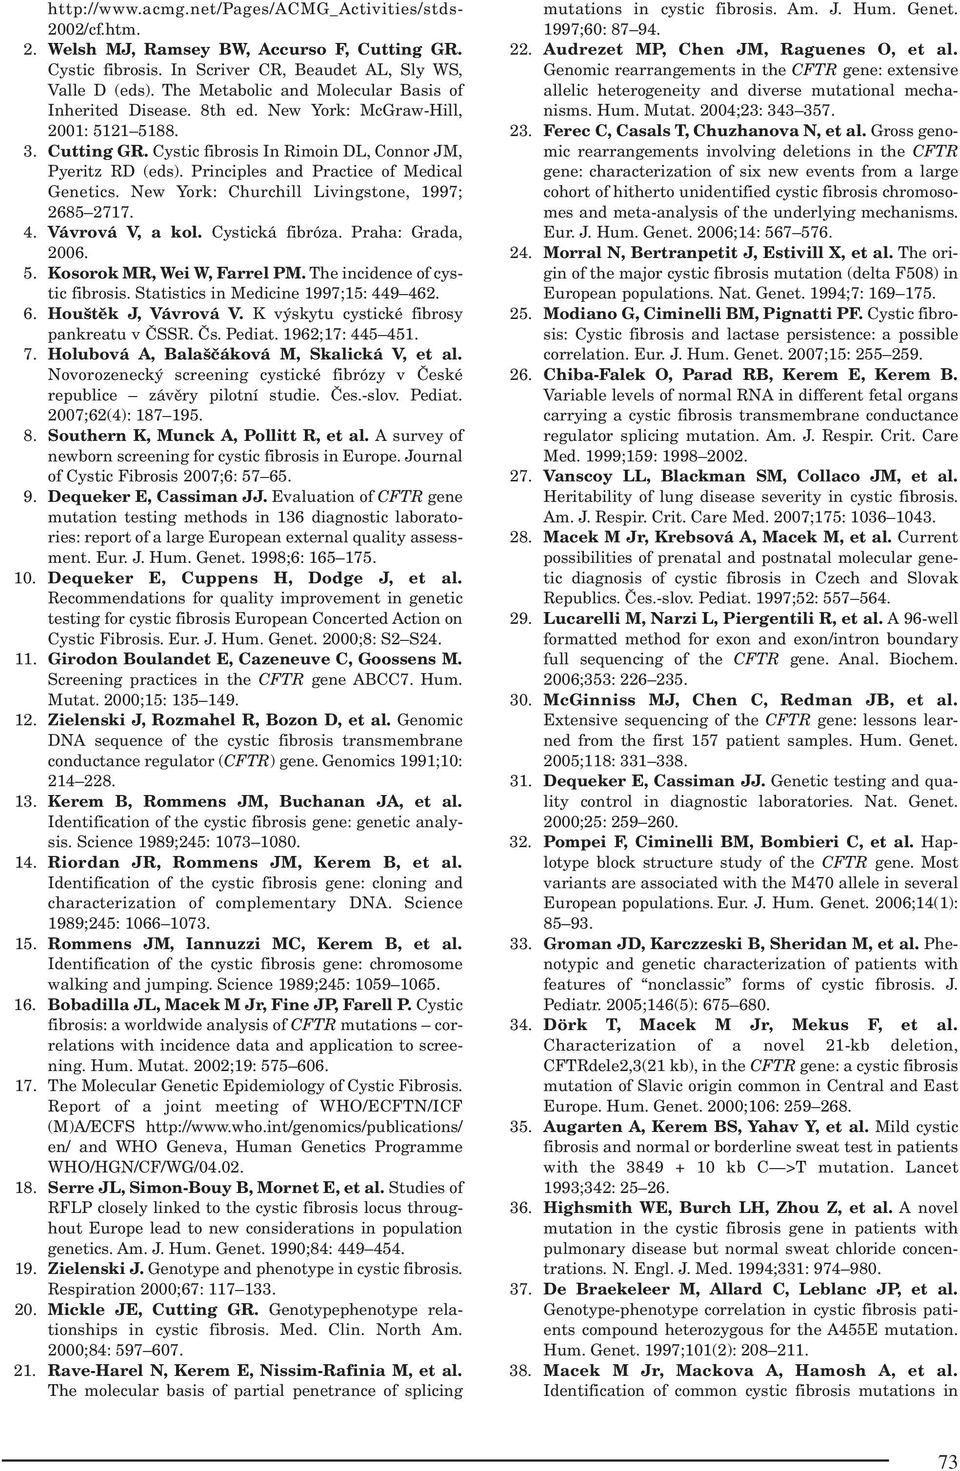 Principles and Practice of Medical Genetics. New York: Churchill Livingstone, 1997; 2685 2717. 4. Vávrová V, a kol. Cystická fibróza. Praha: Grada, 2006. 5. Kosorok MR, Wei W, Farrel PM.